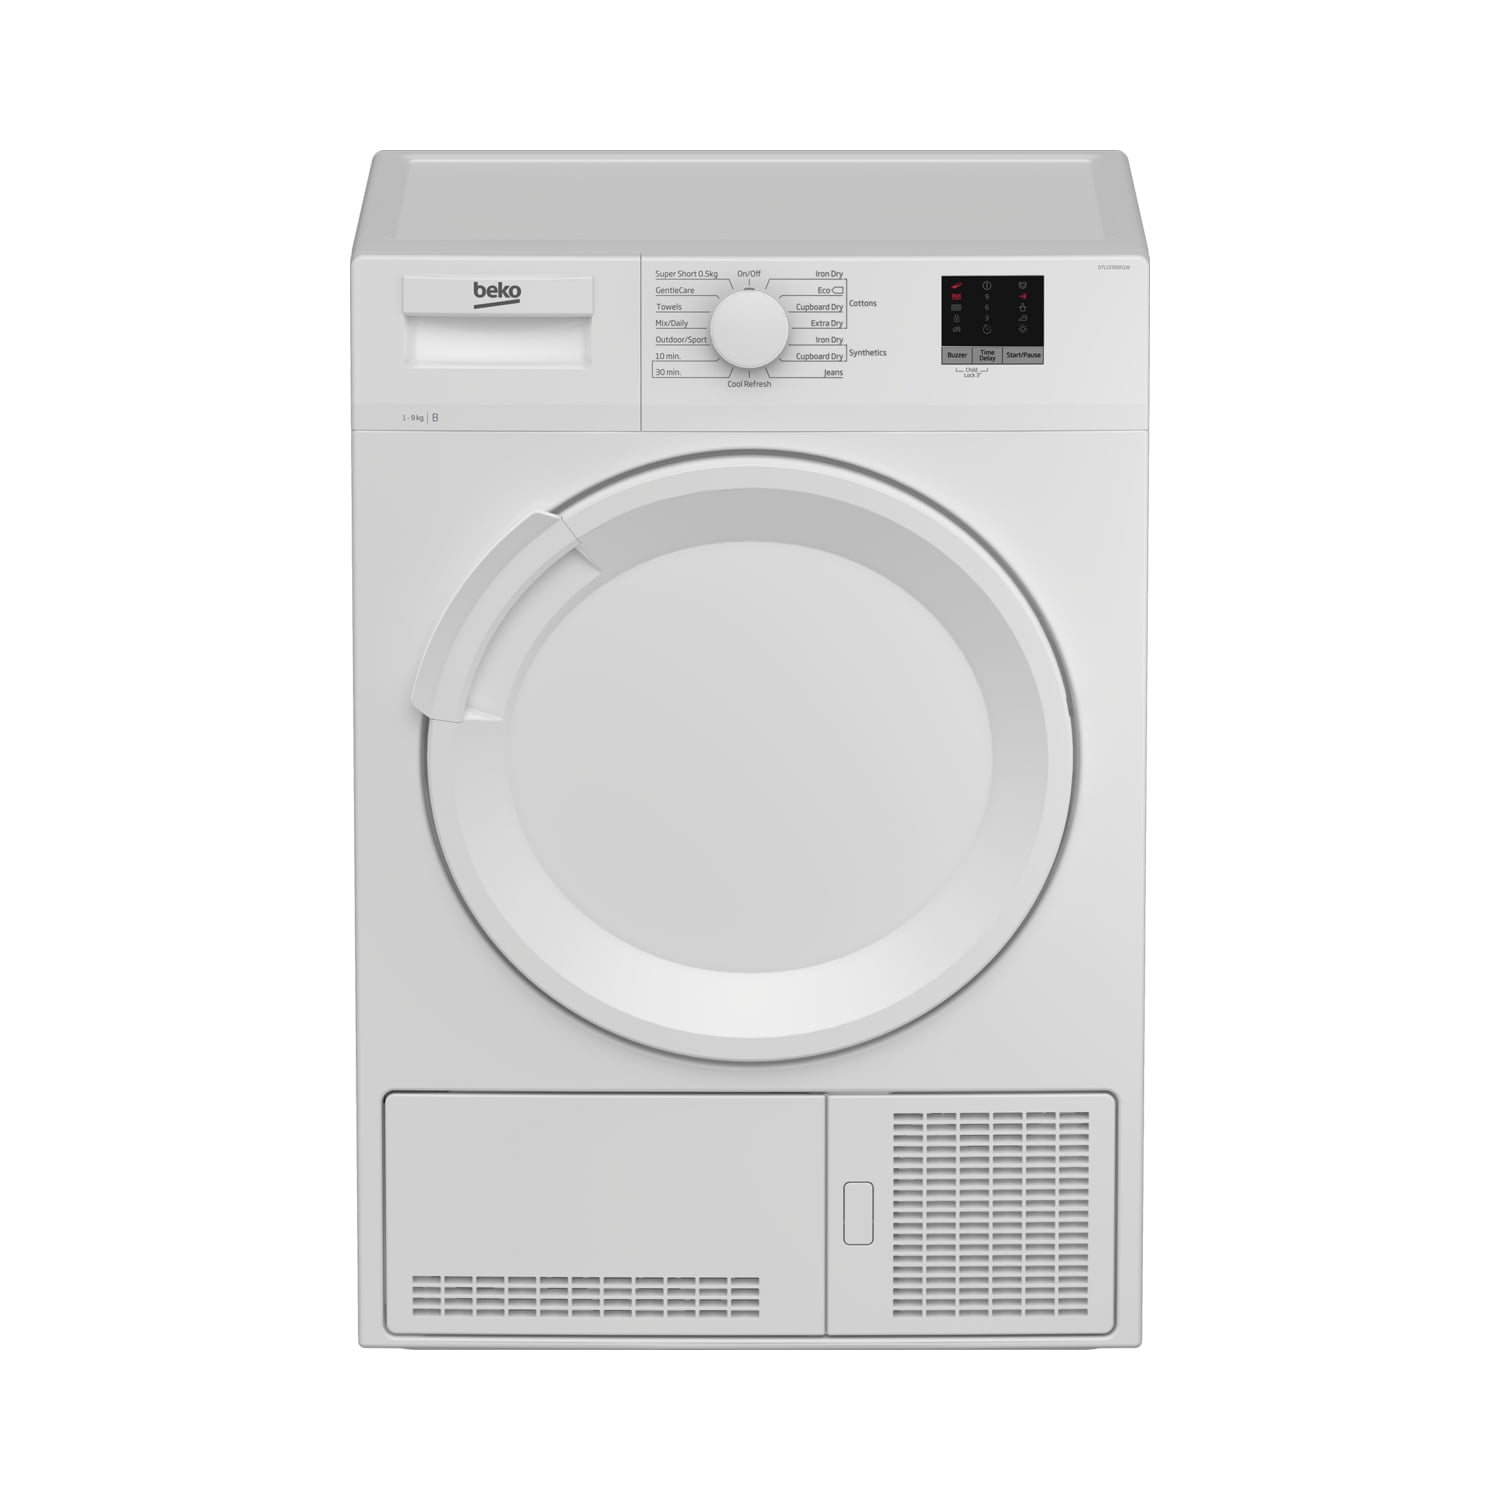 Beko DTLCE90051W 9KG Condenser Tumble Dryer - White